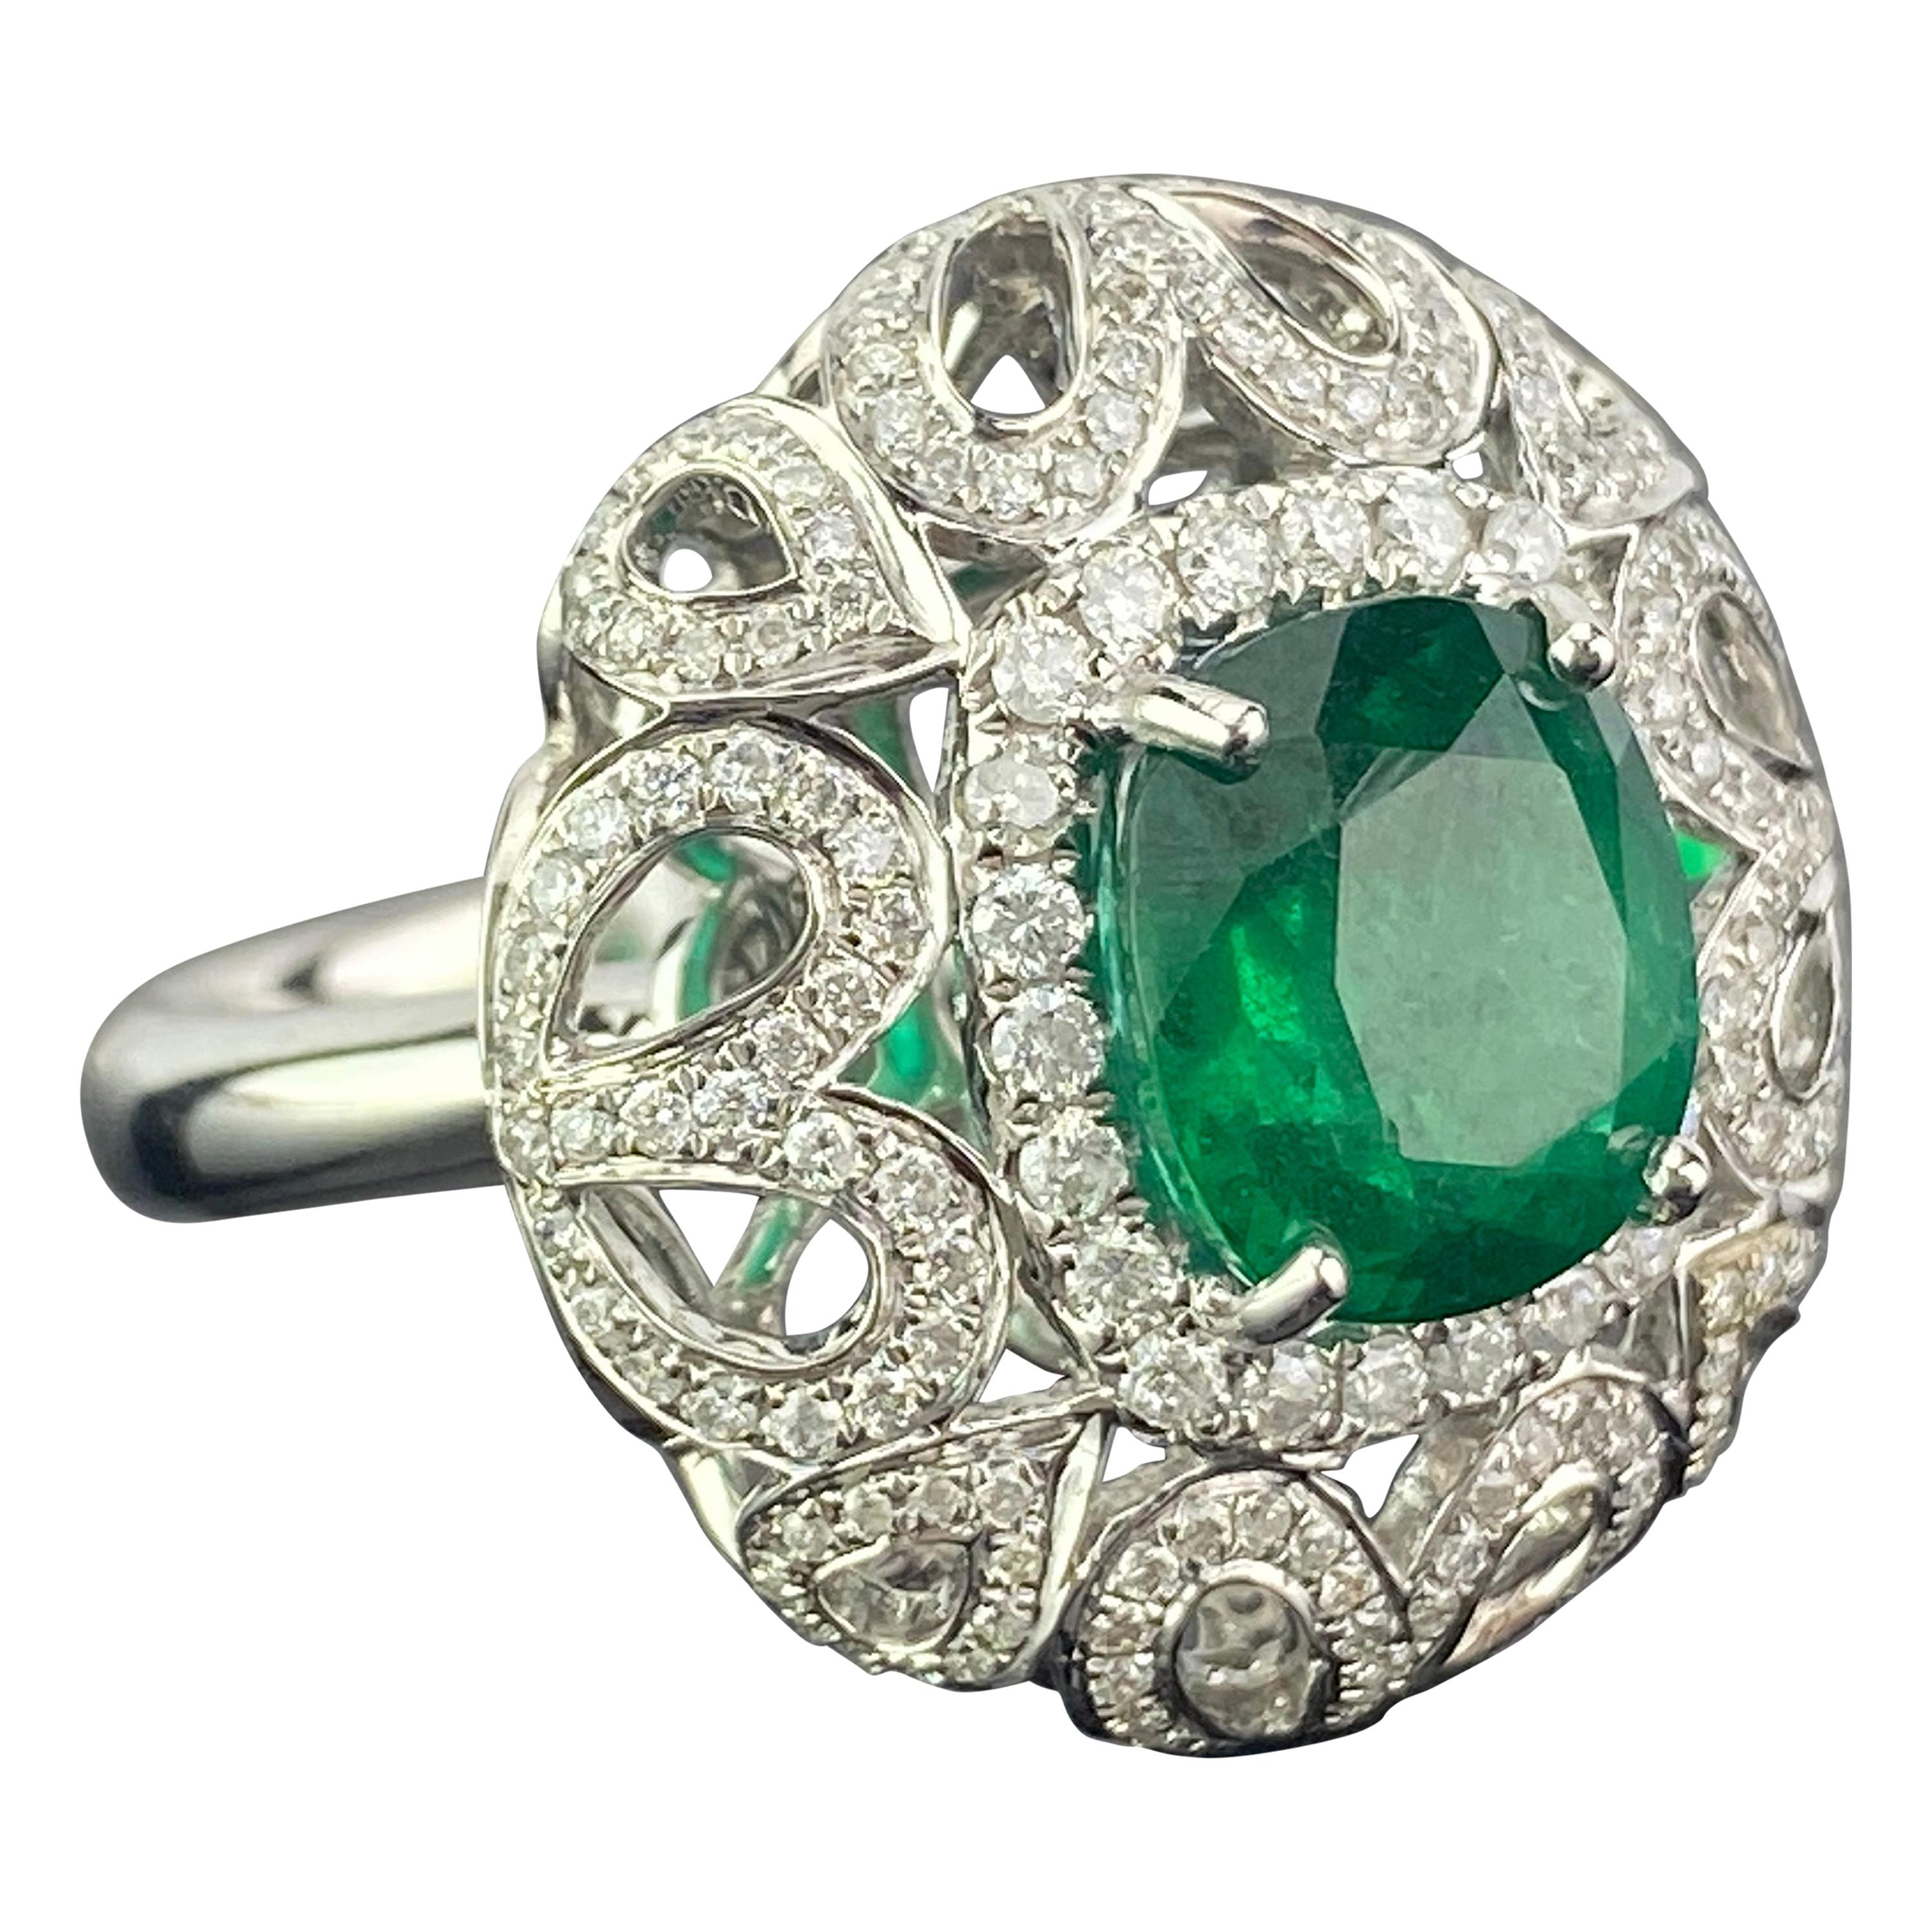 3.24 Carat Cushion Cut Emerald and Diamond Cocktail Ring